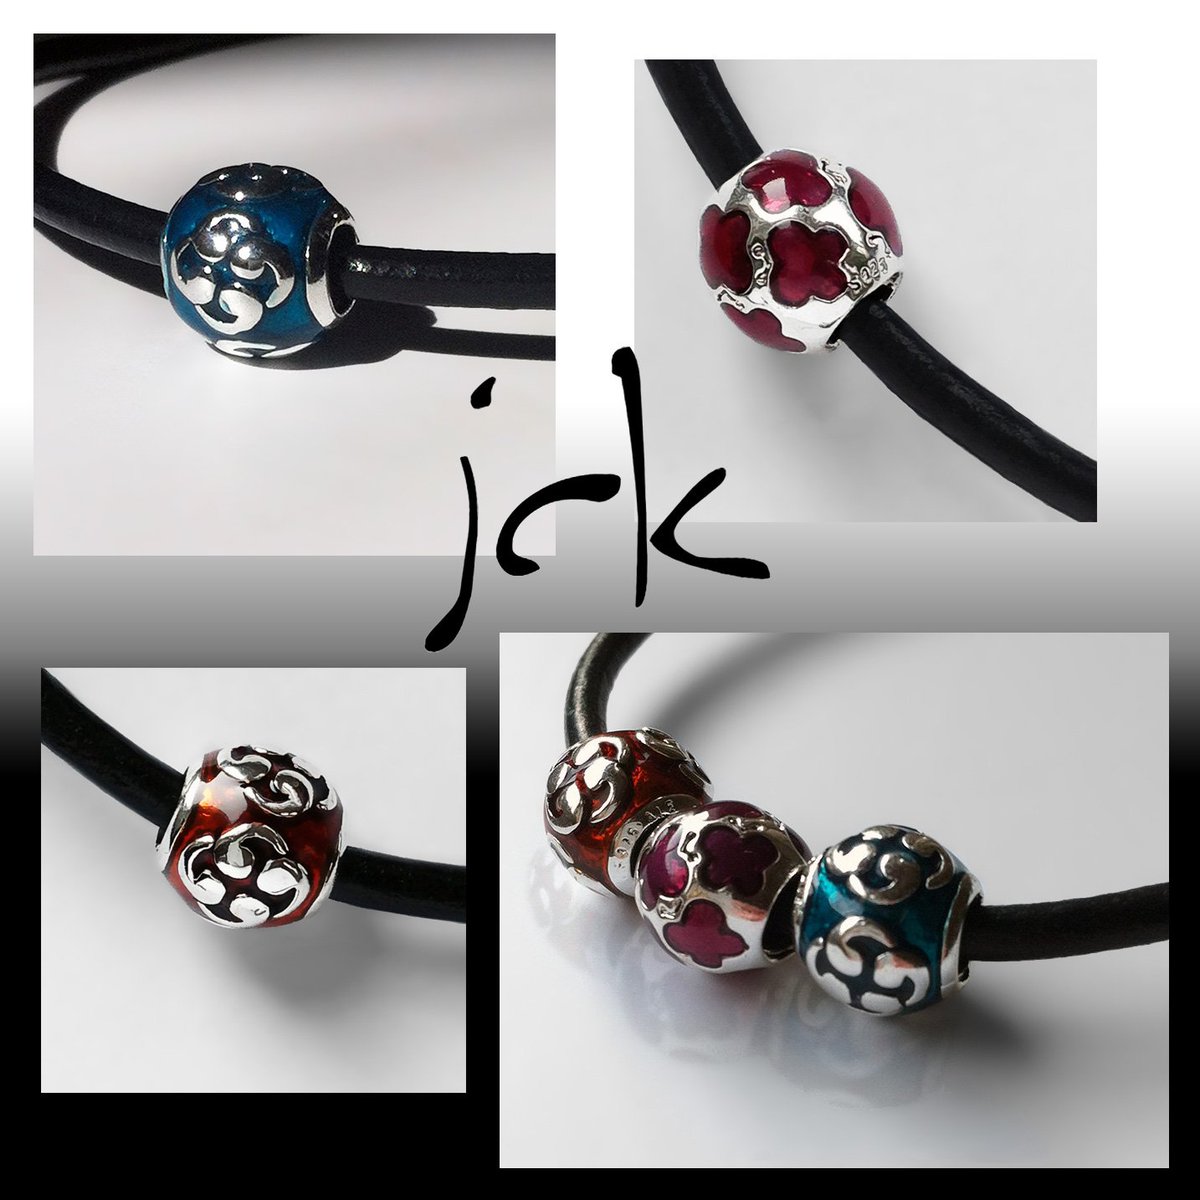 ✦ Silver Enamel #bracelets ✦ by #jck
JckJewel.etsy.com 

#leathercord #SilverEnamel #jck
#FlockBN #UKBiz #SNRTG